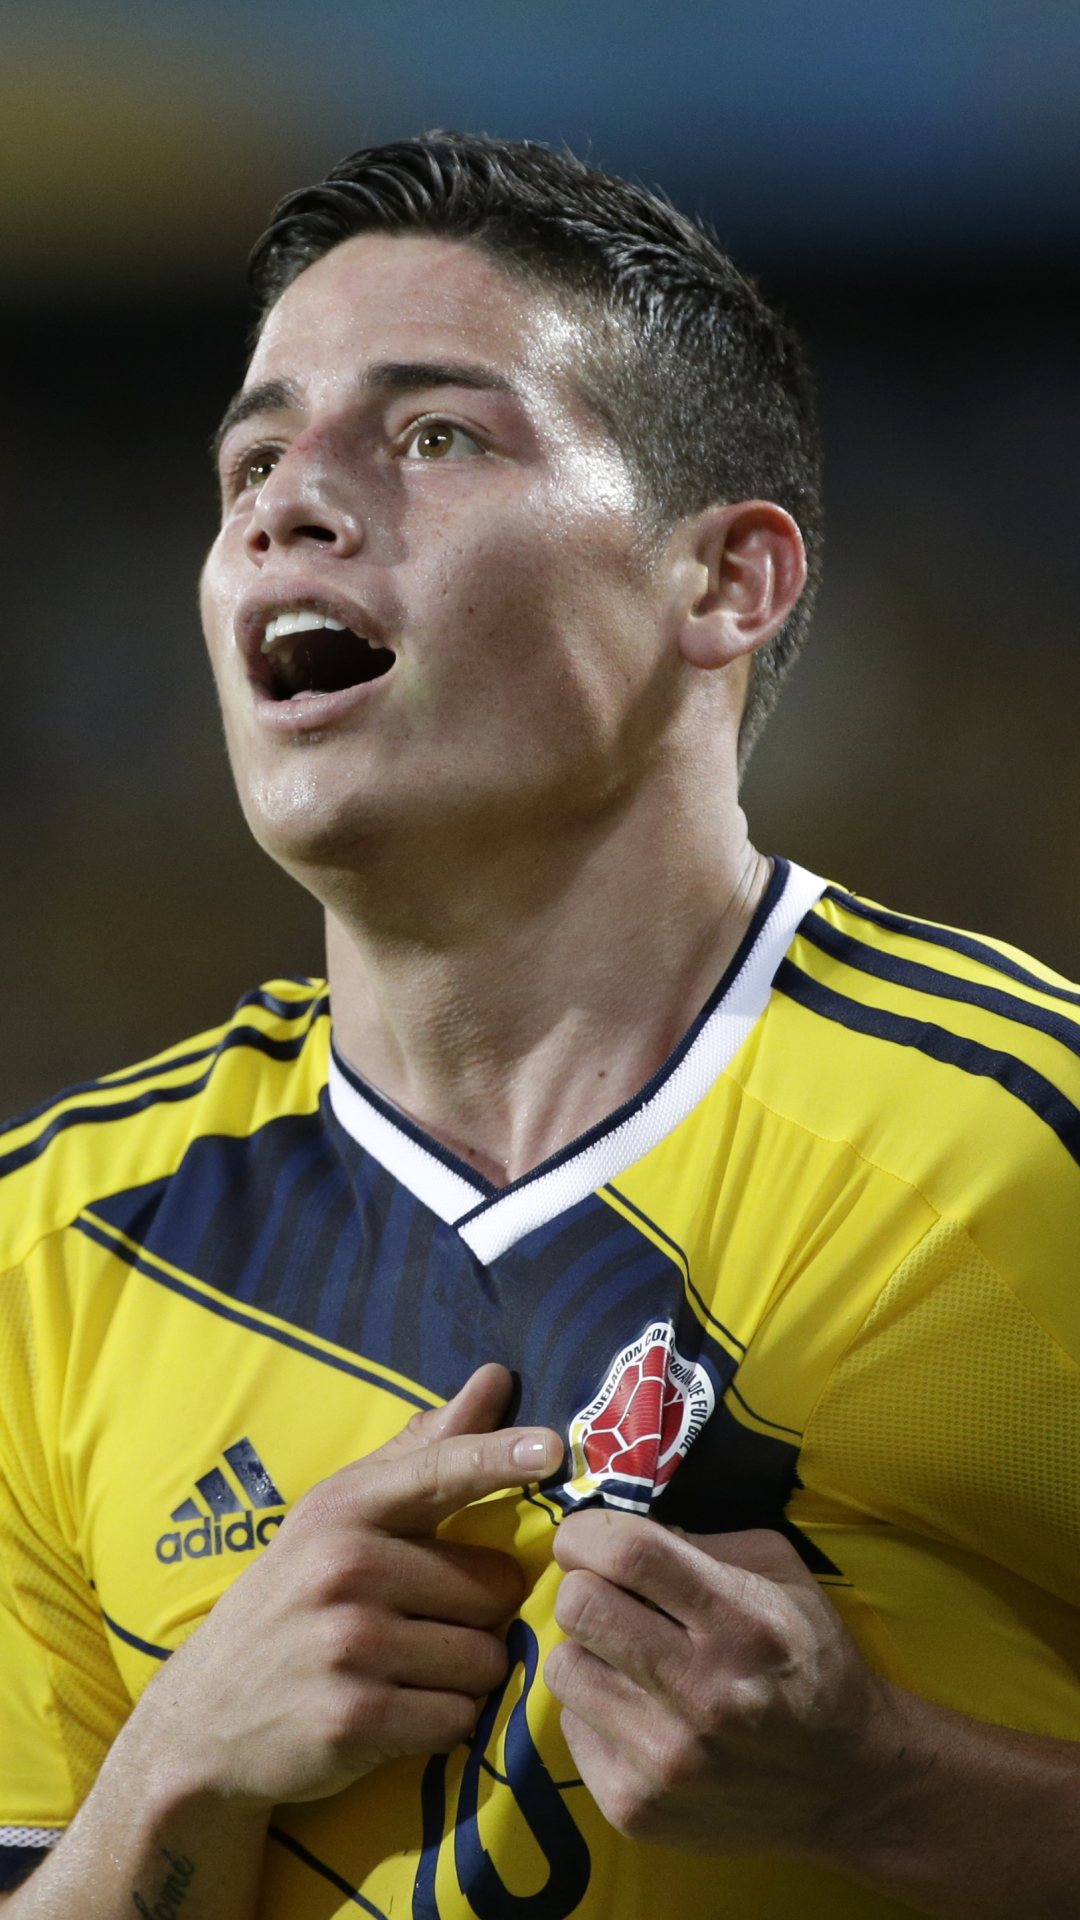 Descarga gratuita de fondo de pantalla para móvil de Fútbol, Deporte, James Rodríguez.